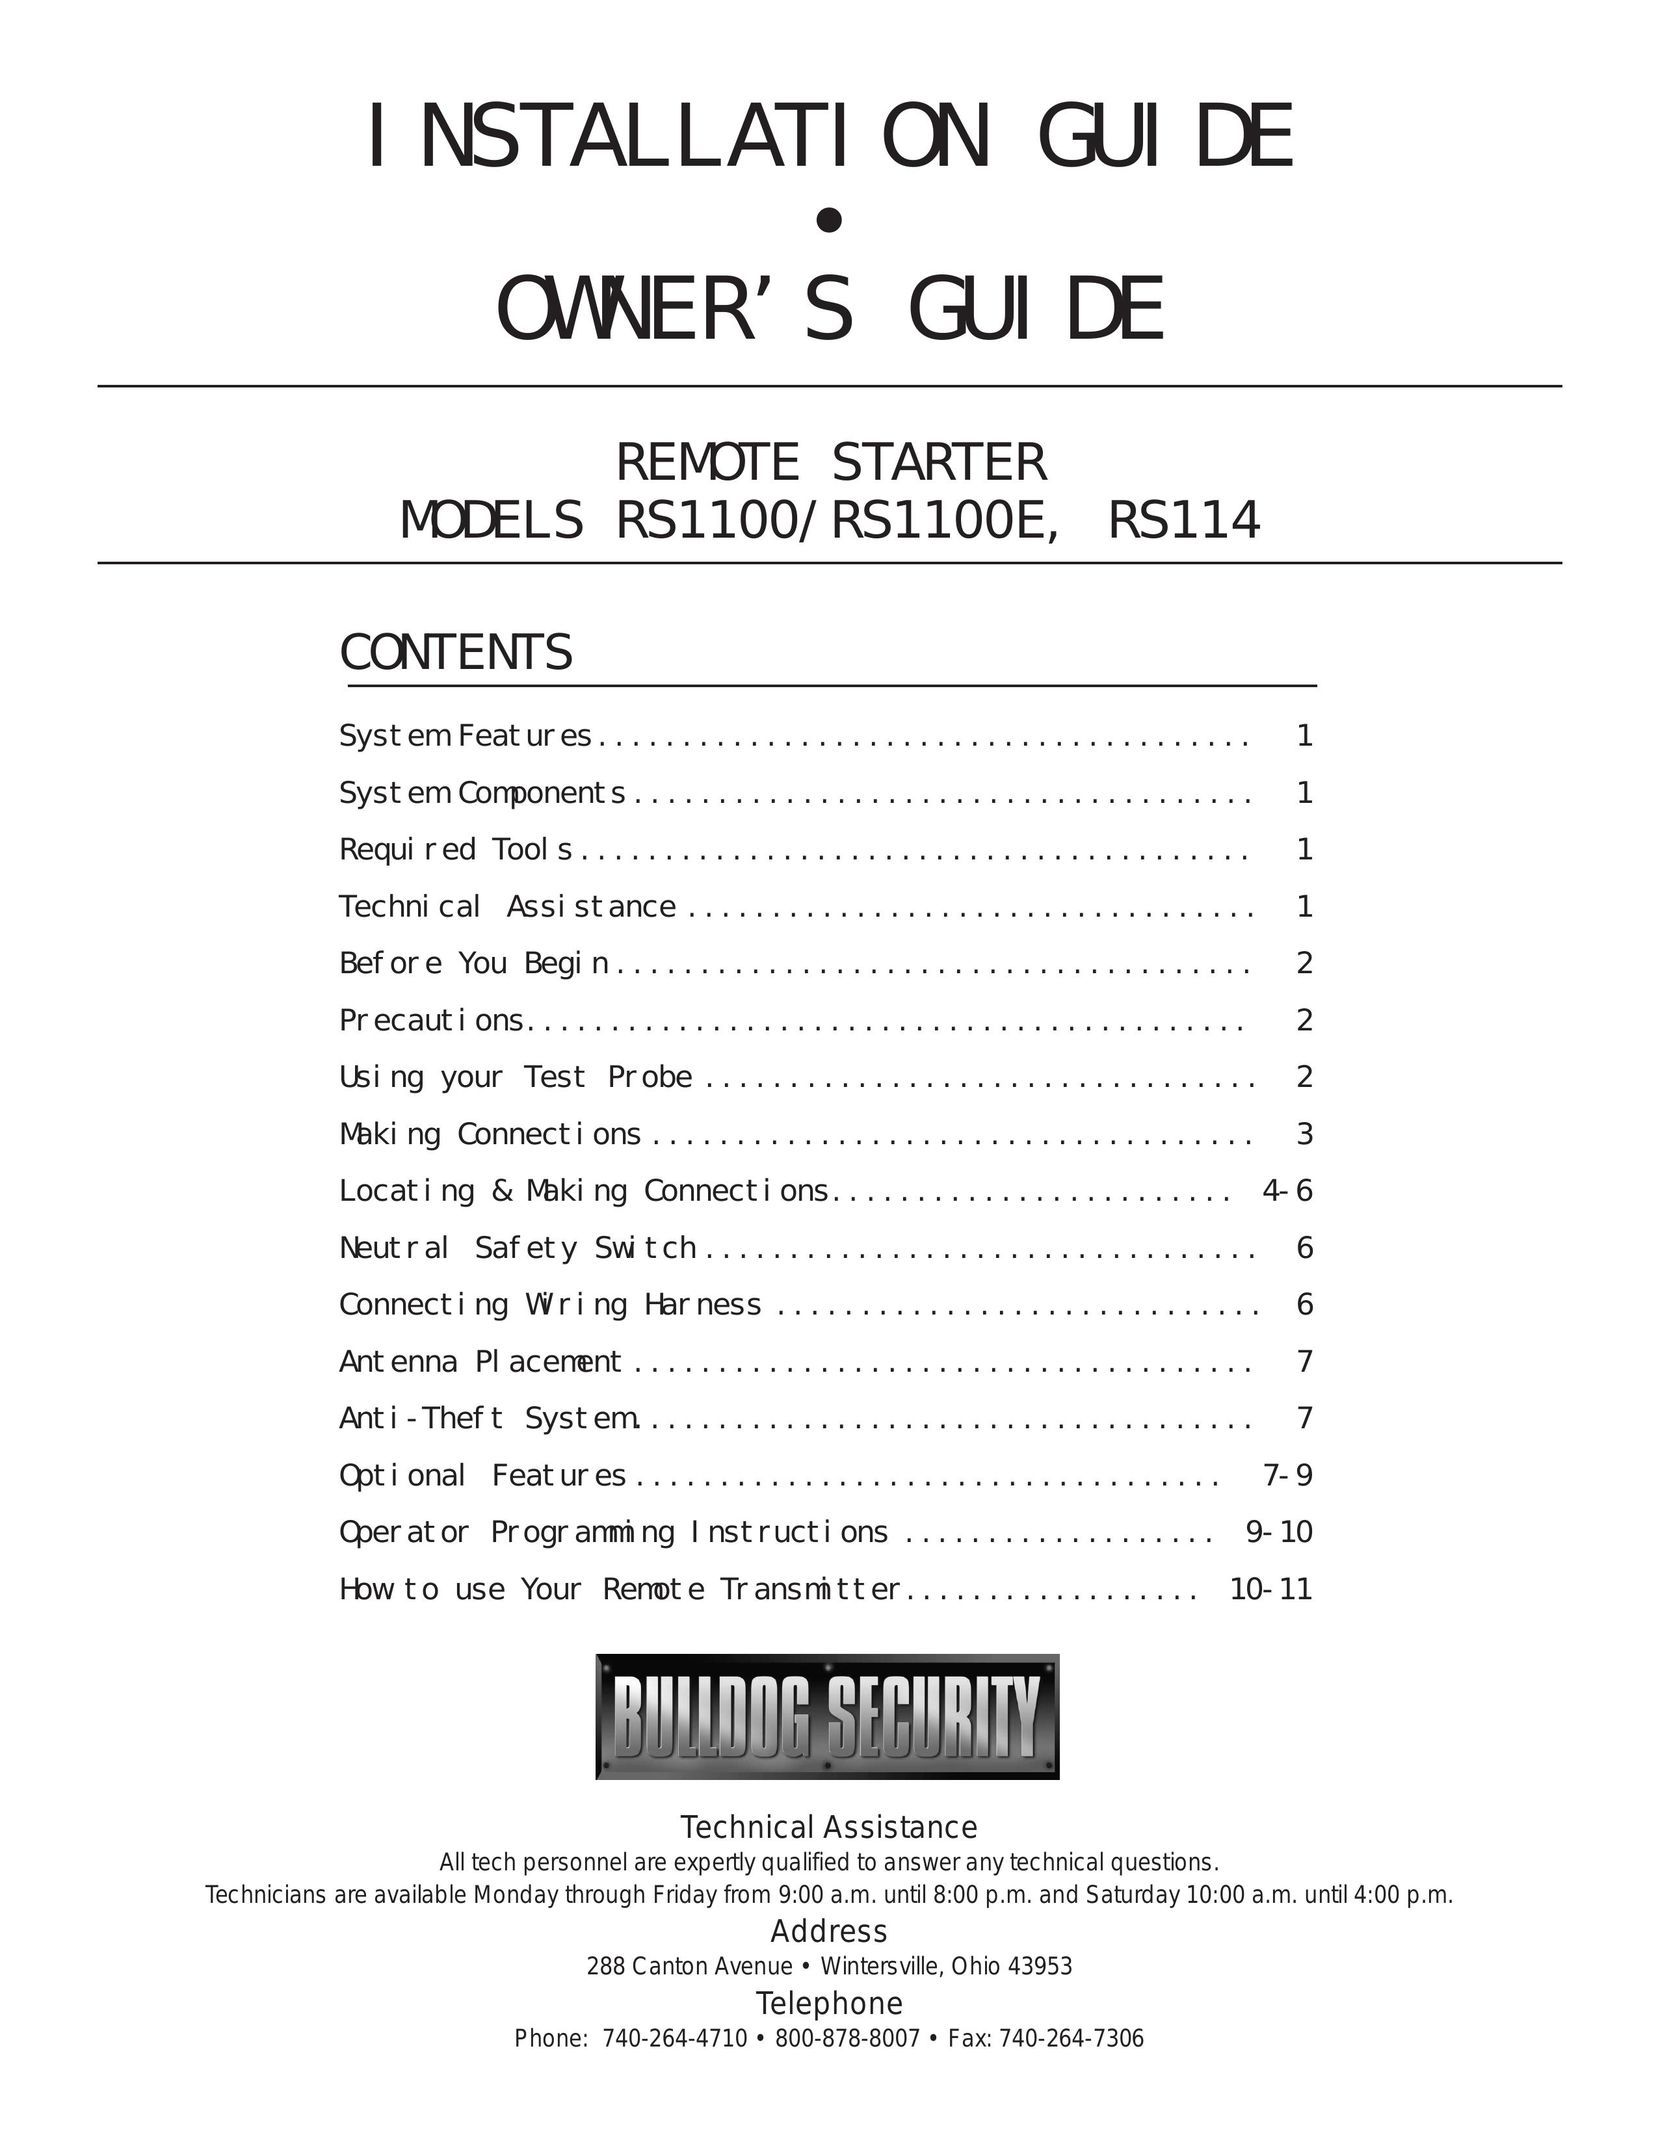 Bulldog Security RS1100E Universal Remote User Manual